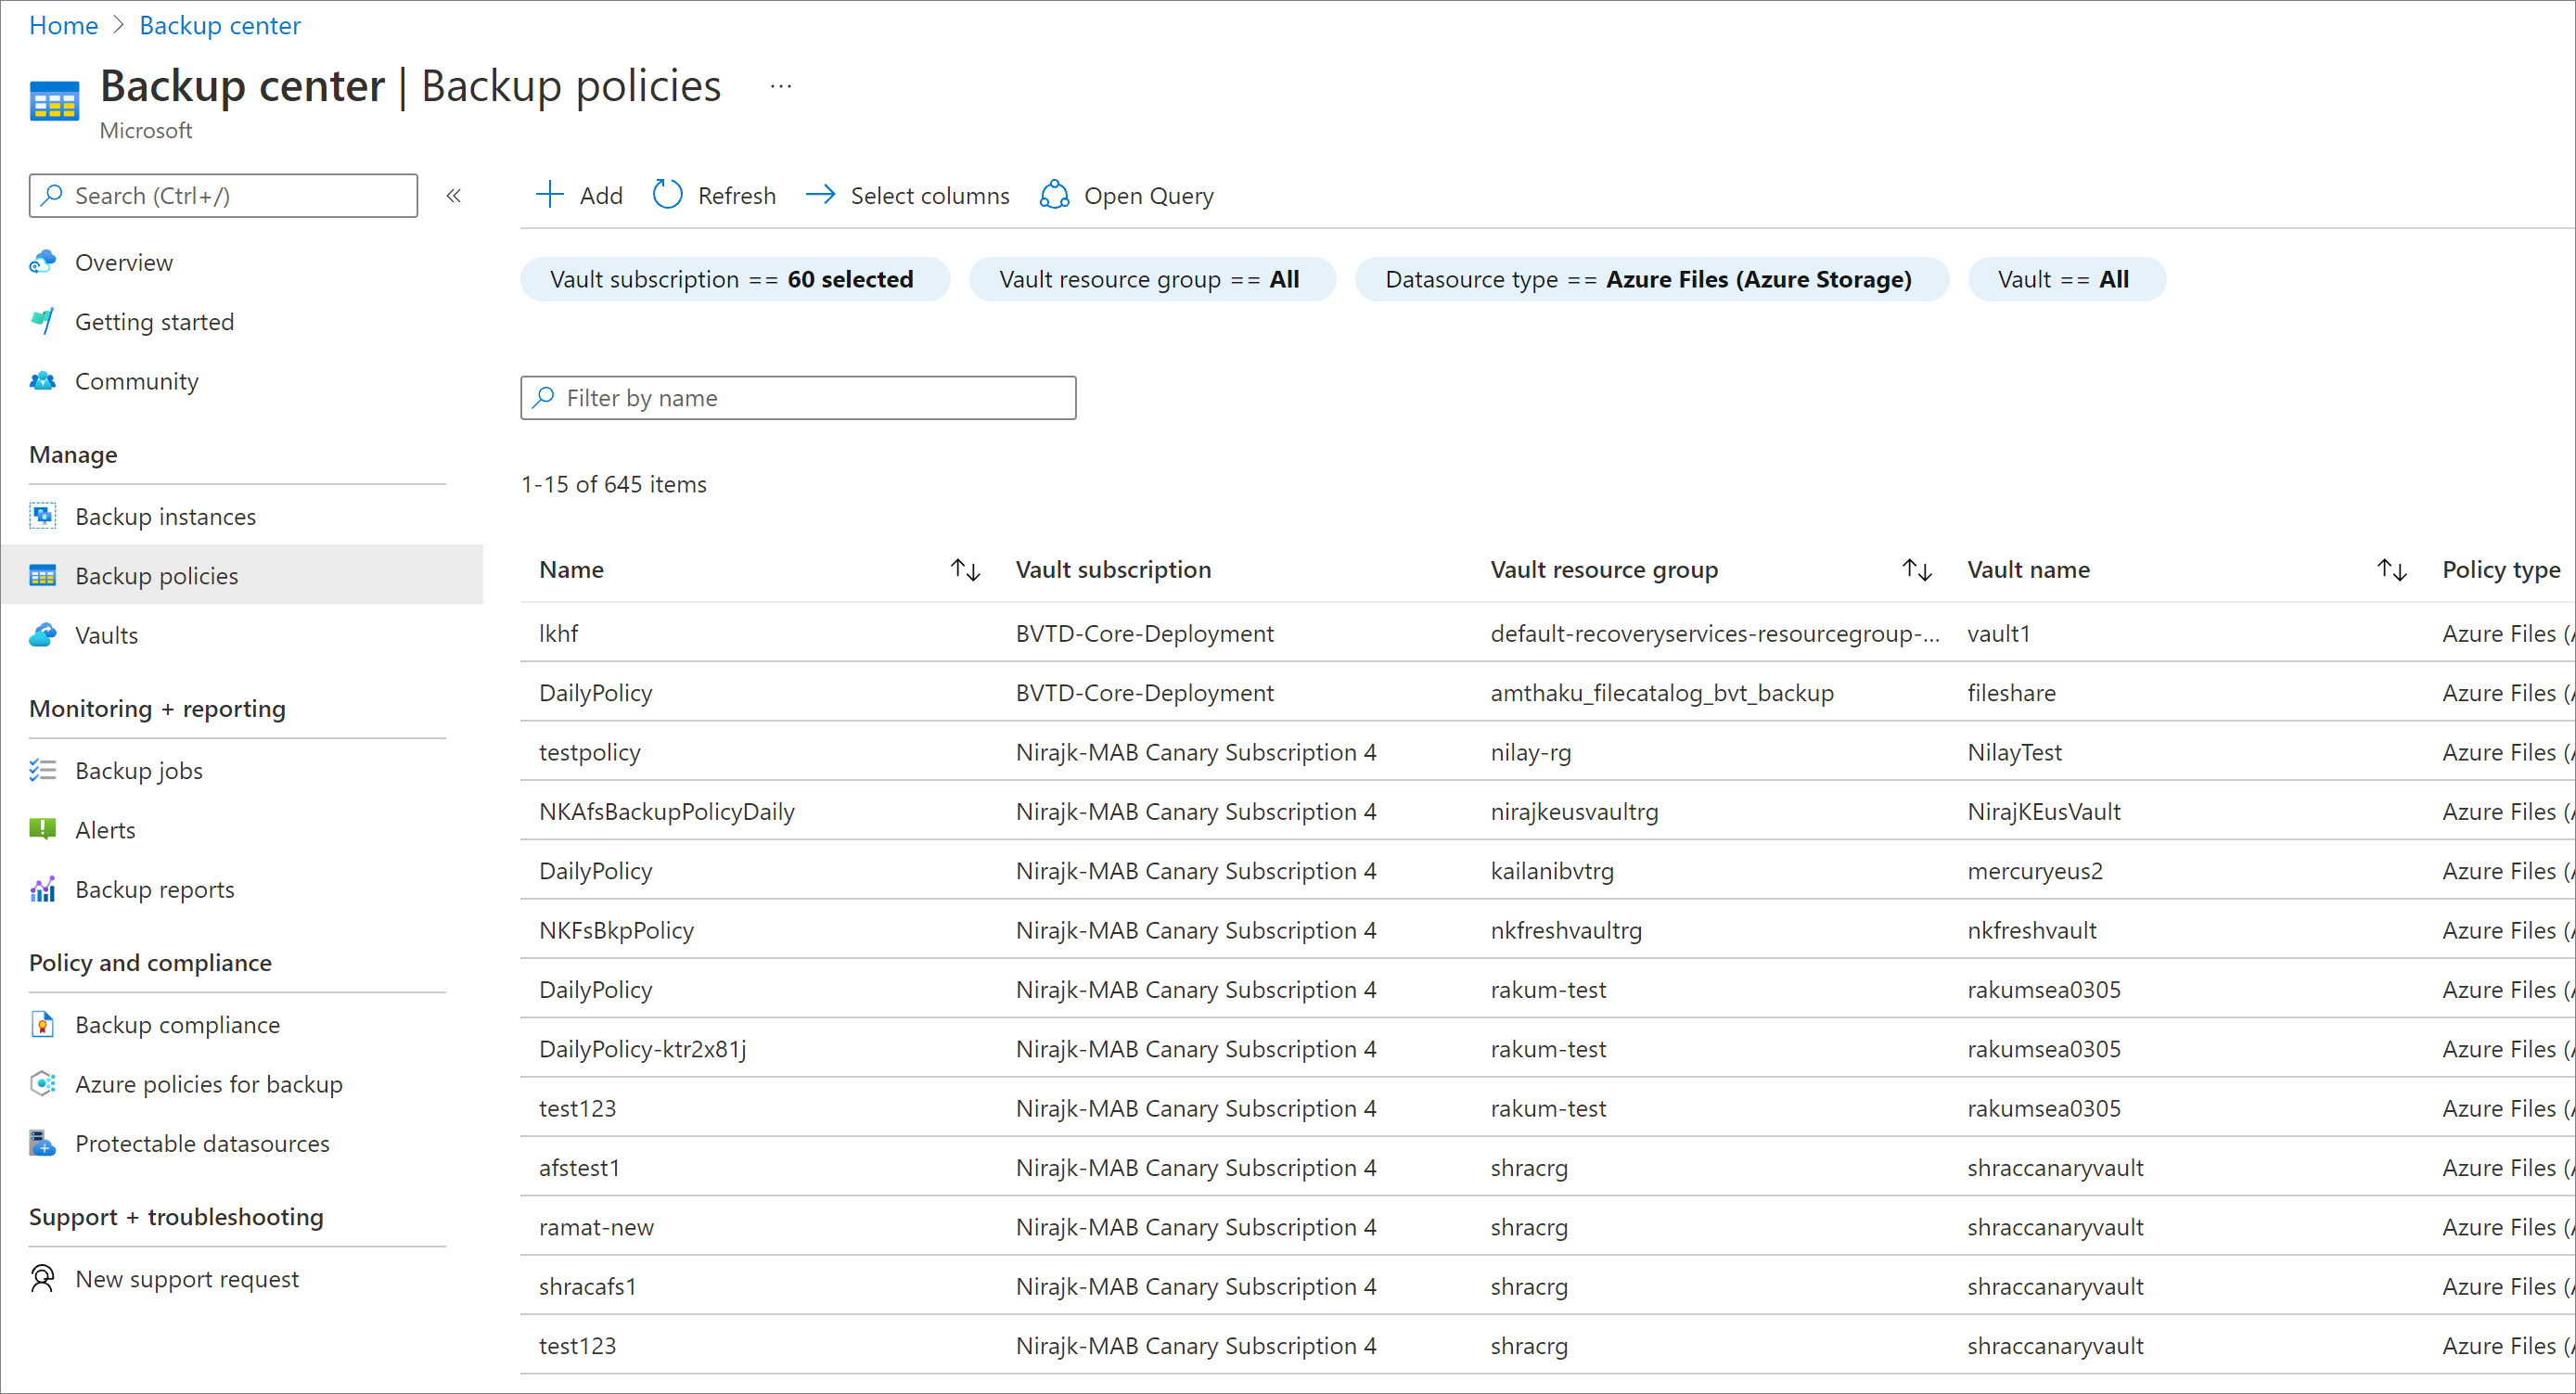 Screenshot showing the all backup policies.